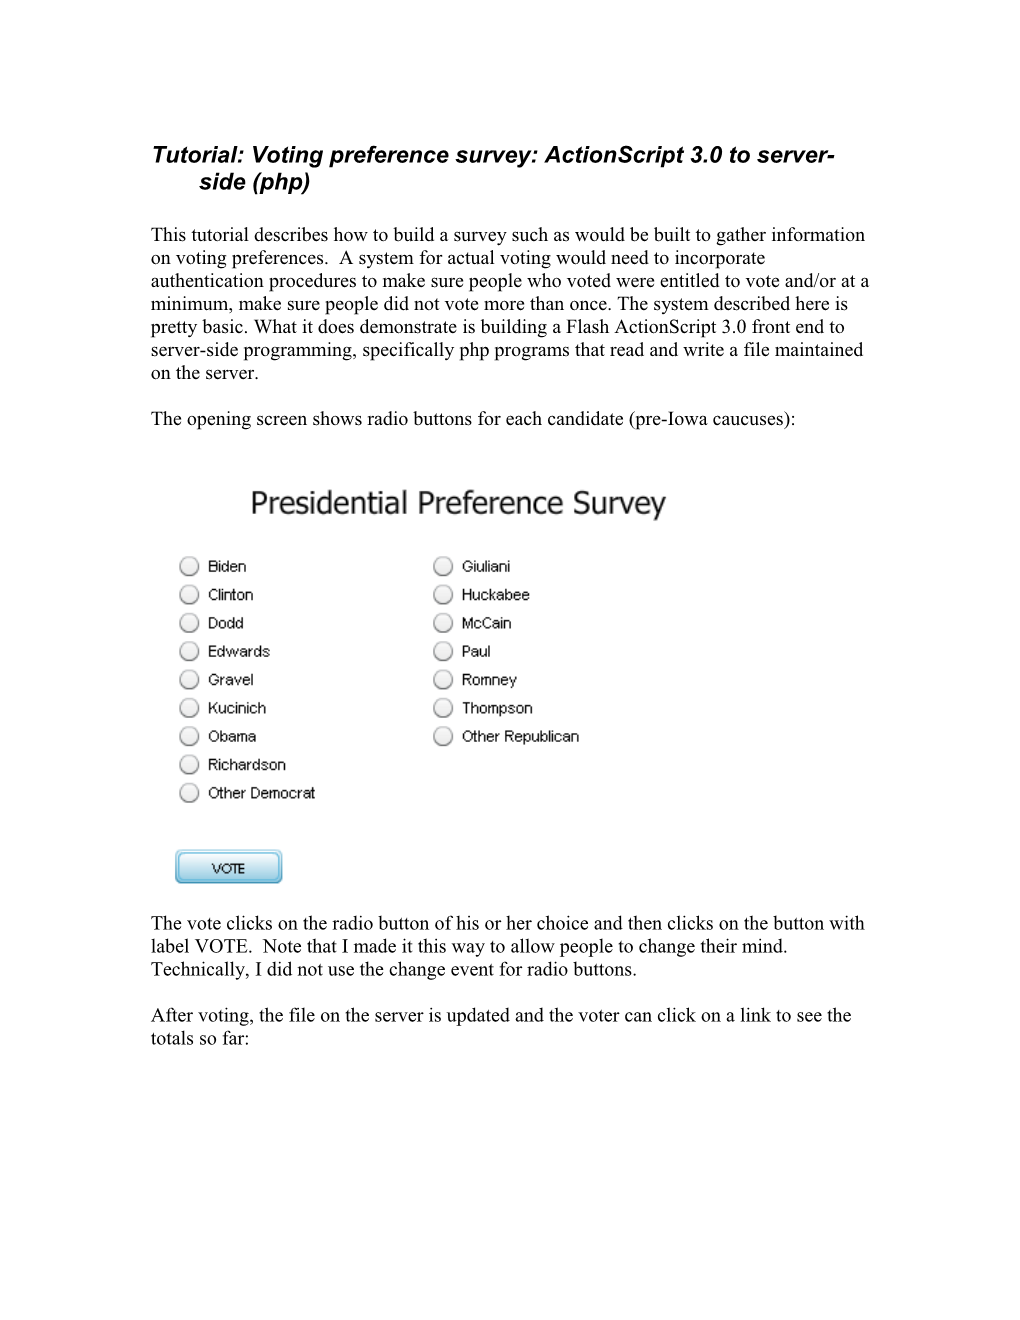 Tutorial: Voting Preference Survey: Actionscript 3